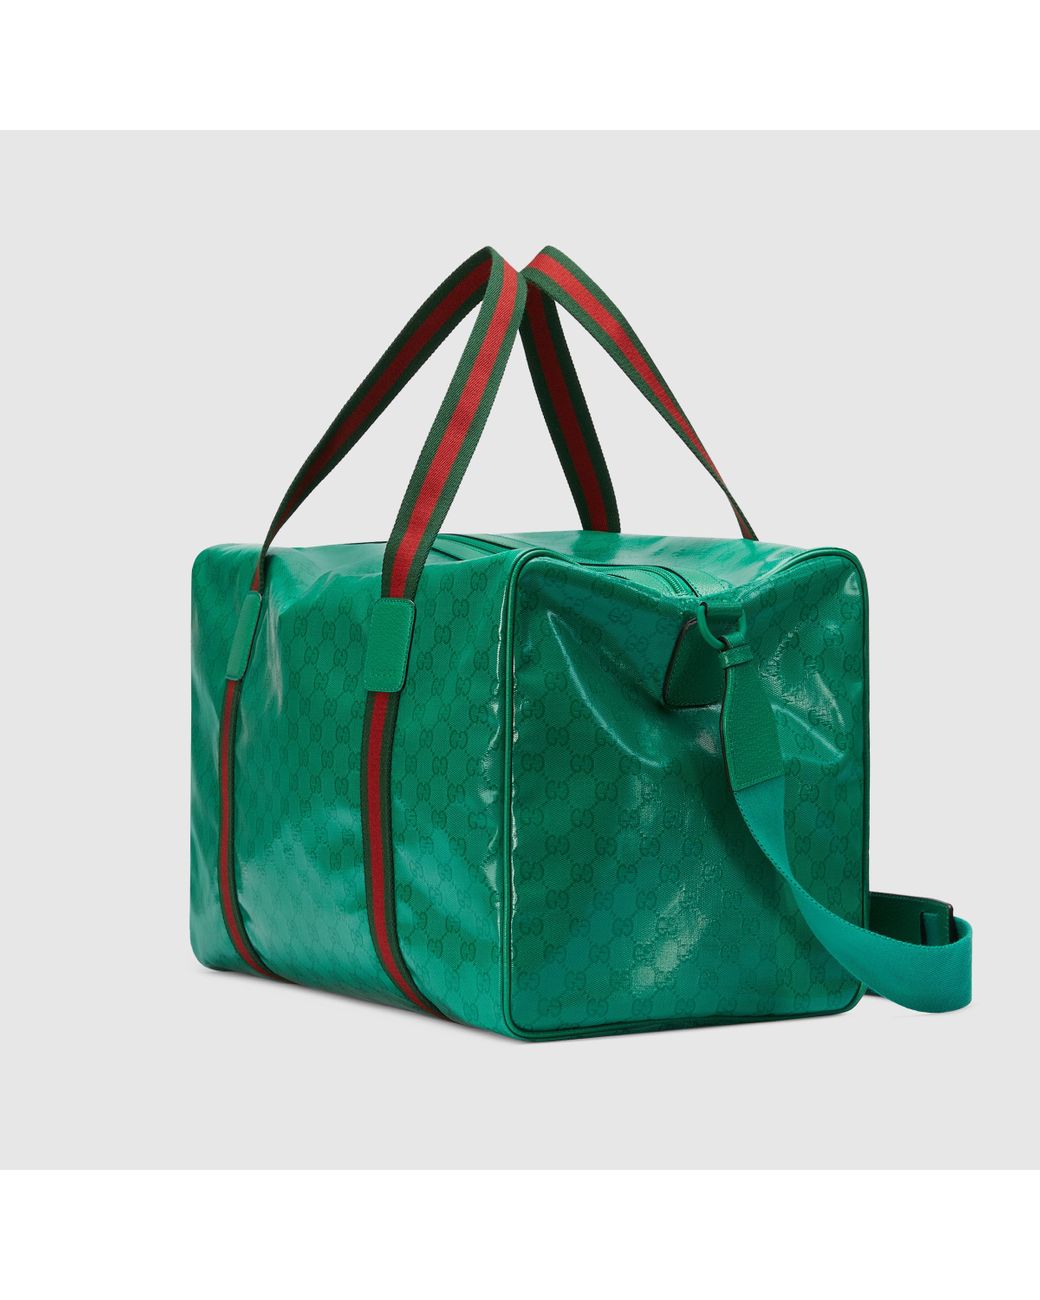 Gucci Black Monogram Canvas Web Duffle Duffel Travel Bag